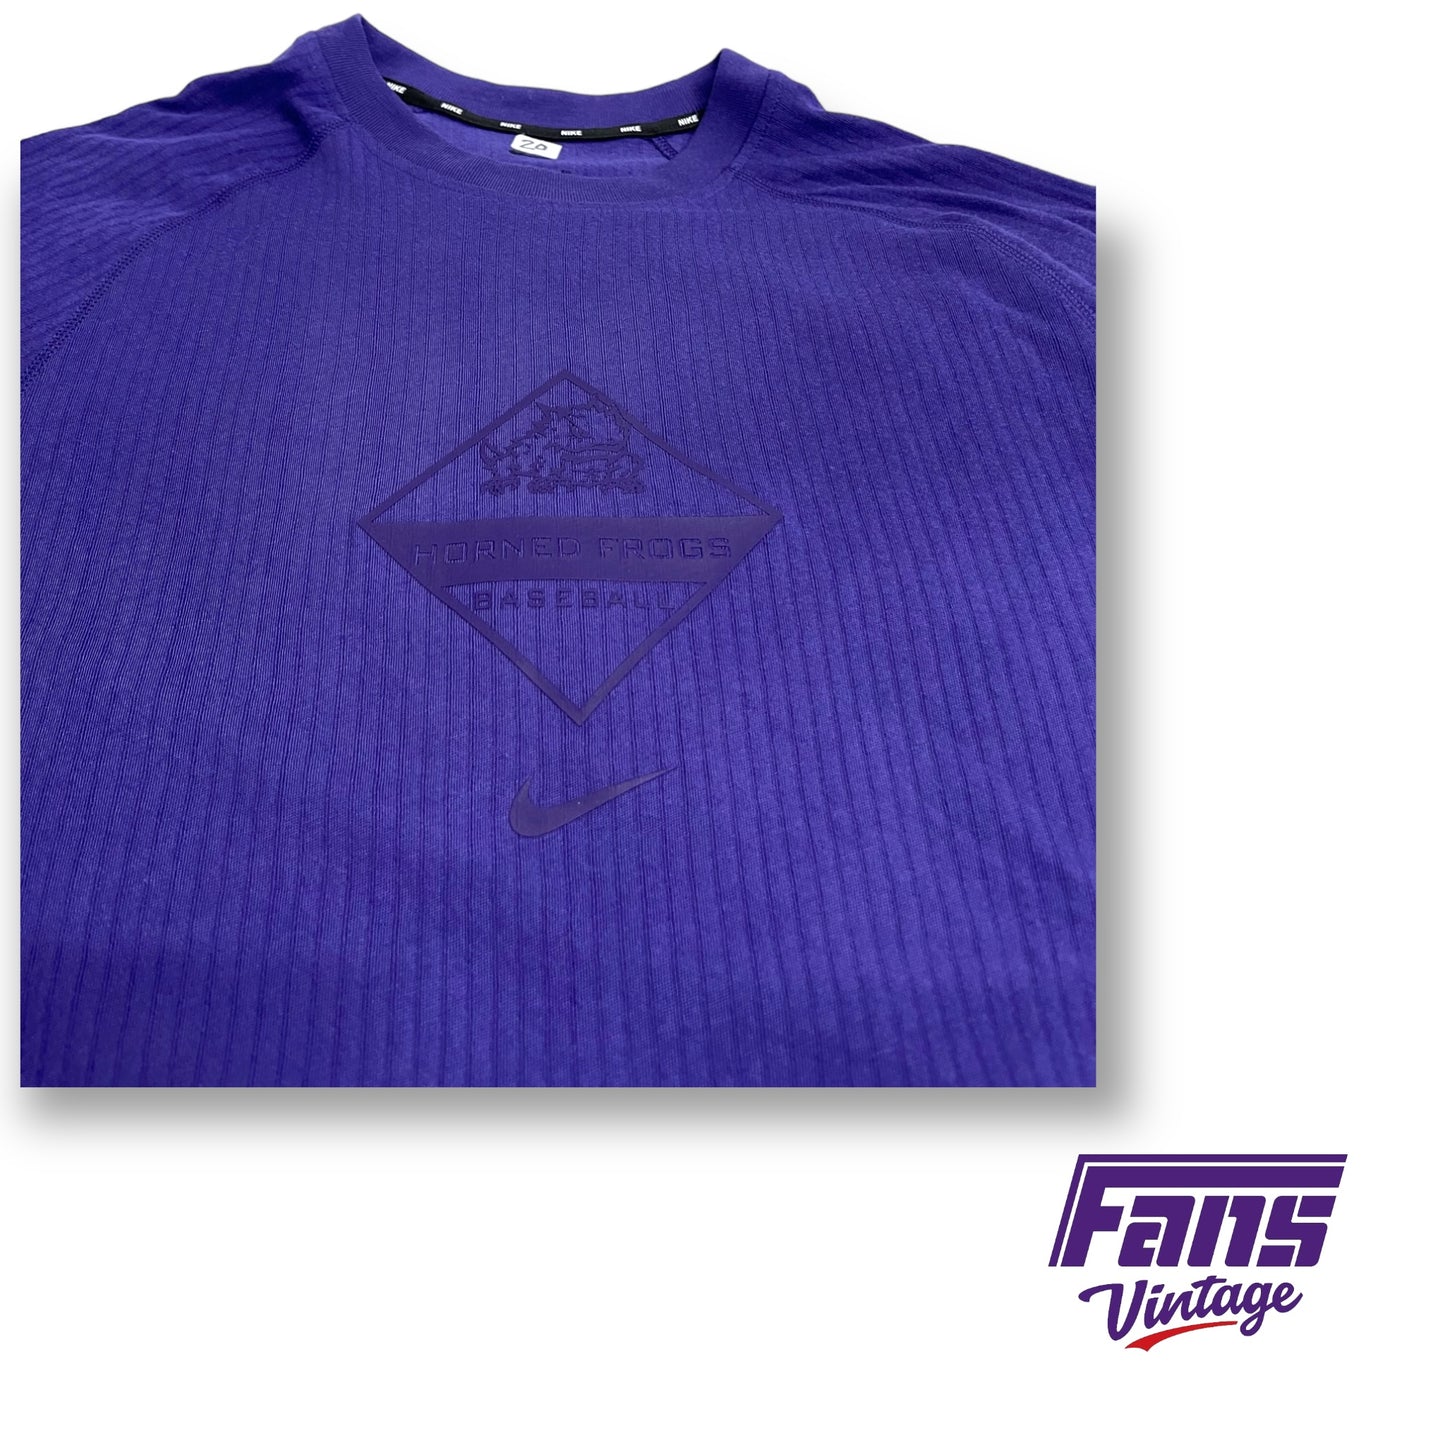 Rare TCU Baseball Team Issue Nike Baseball Raglan Shirt - Awesome Logo!